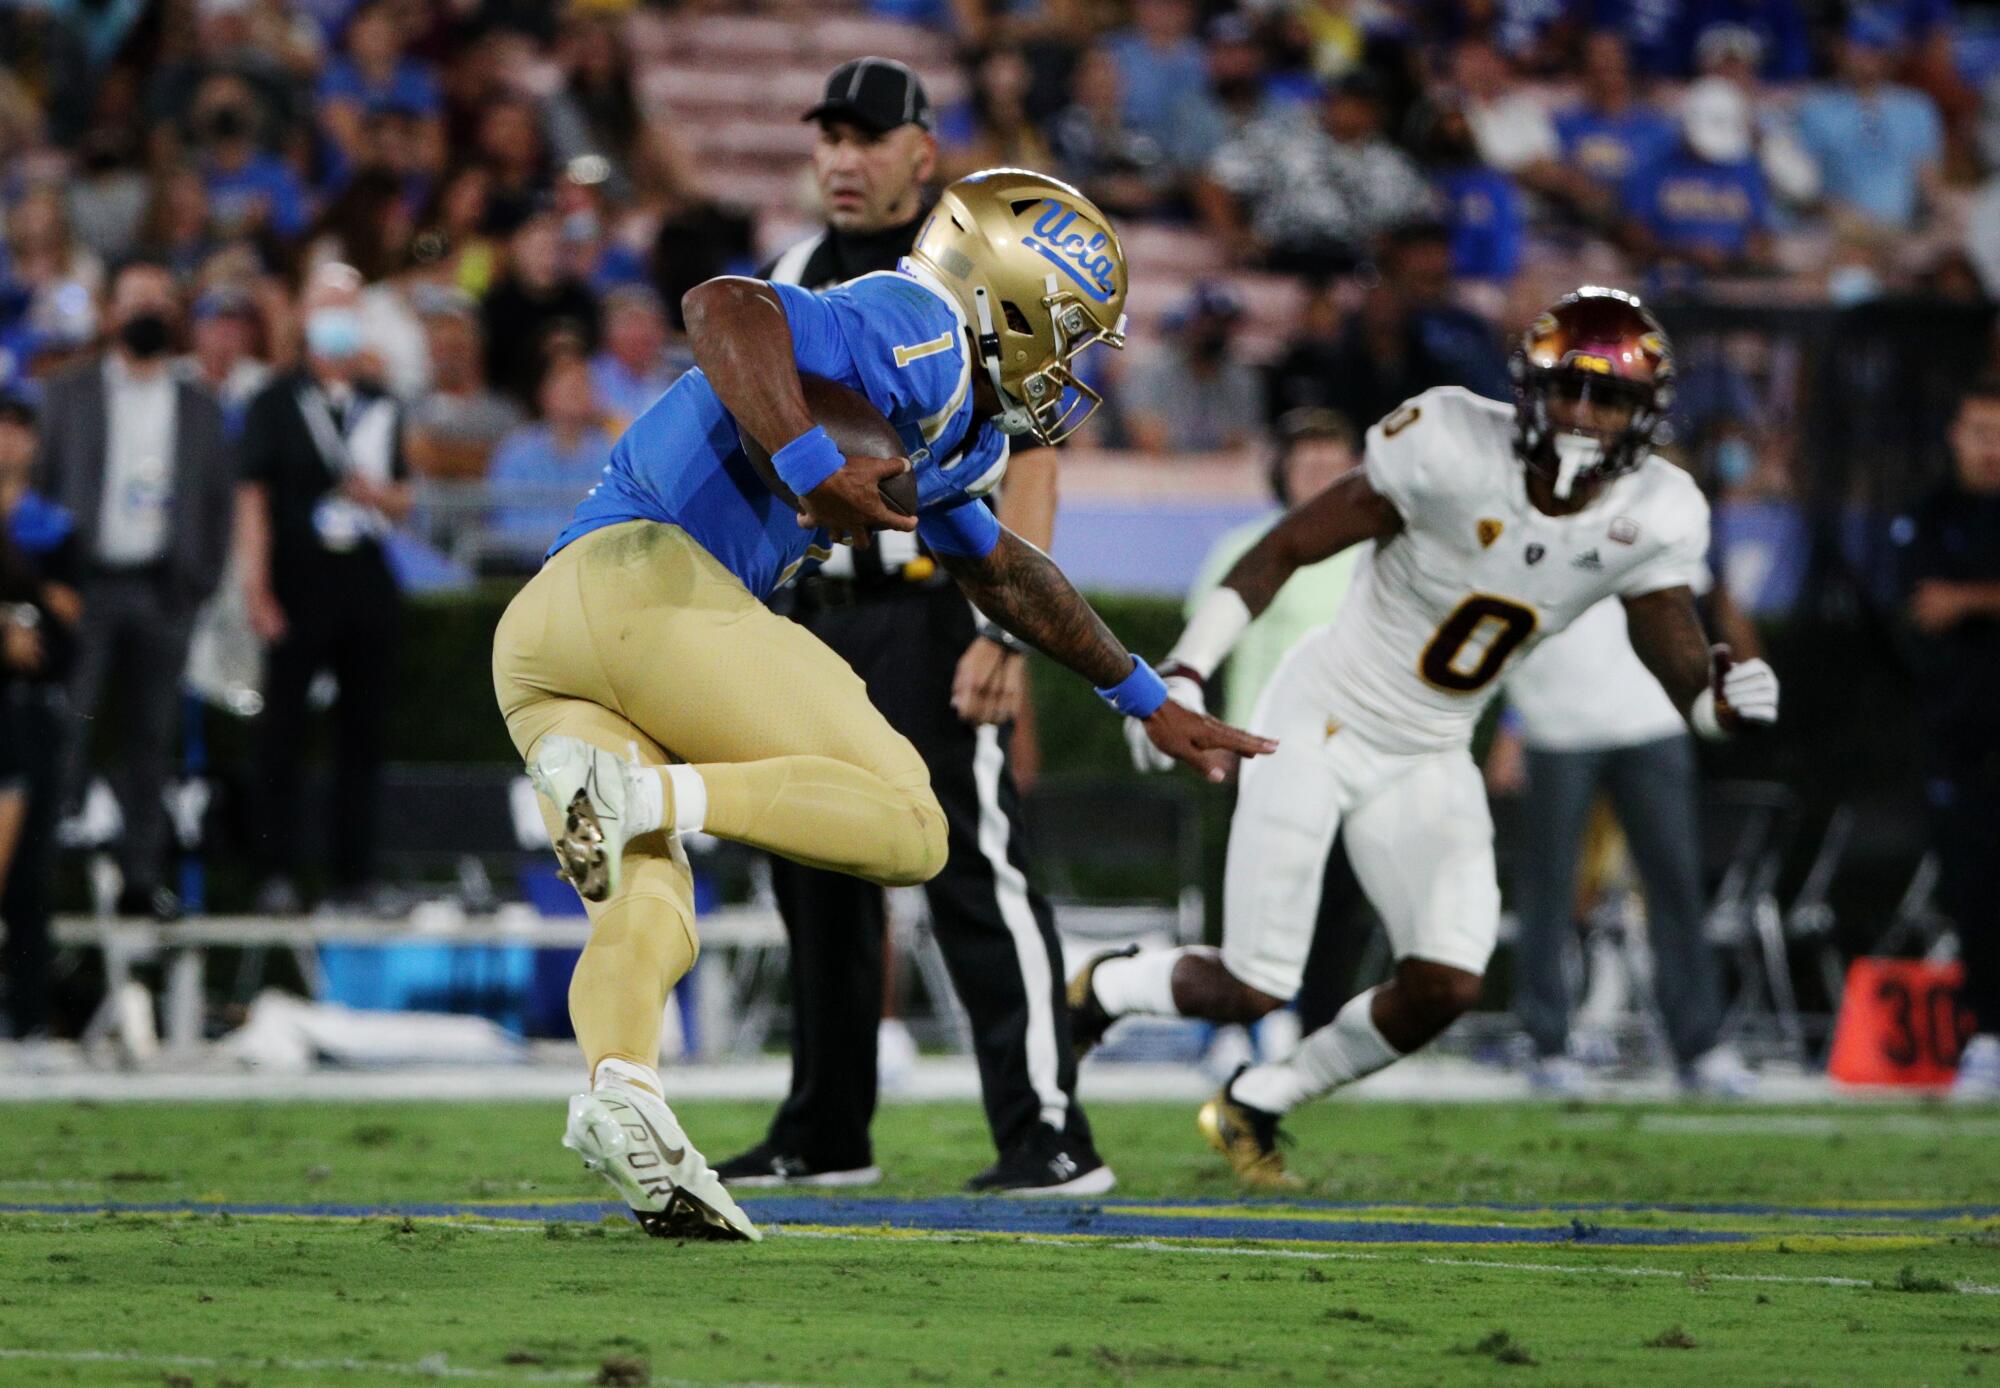 UCLA quarterback Dorian Thompson-Robinson scrambles with the ball against Arizona State.